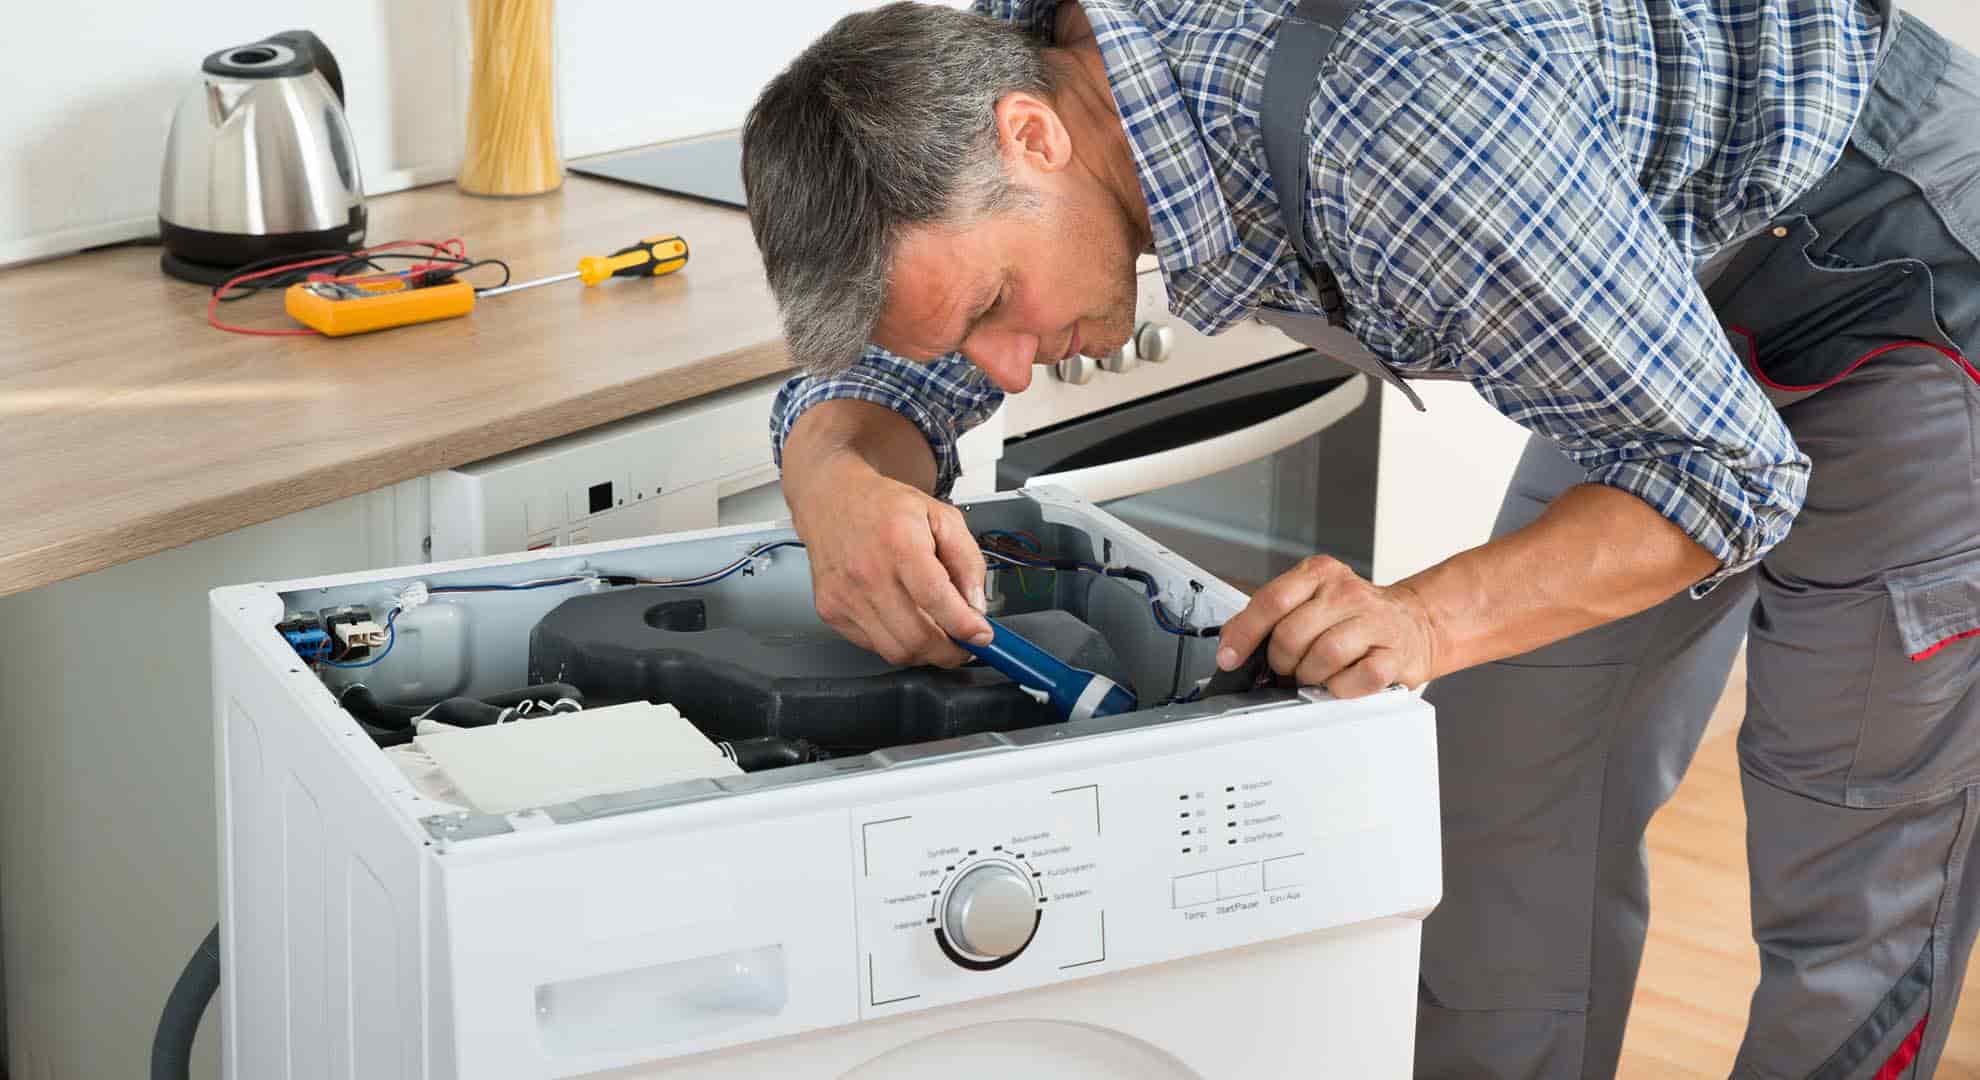 Person repairing a washing machine